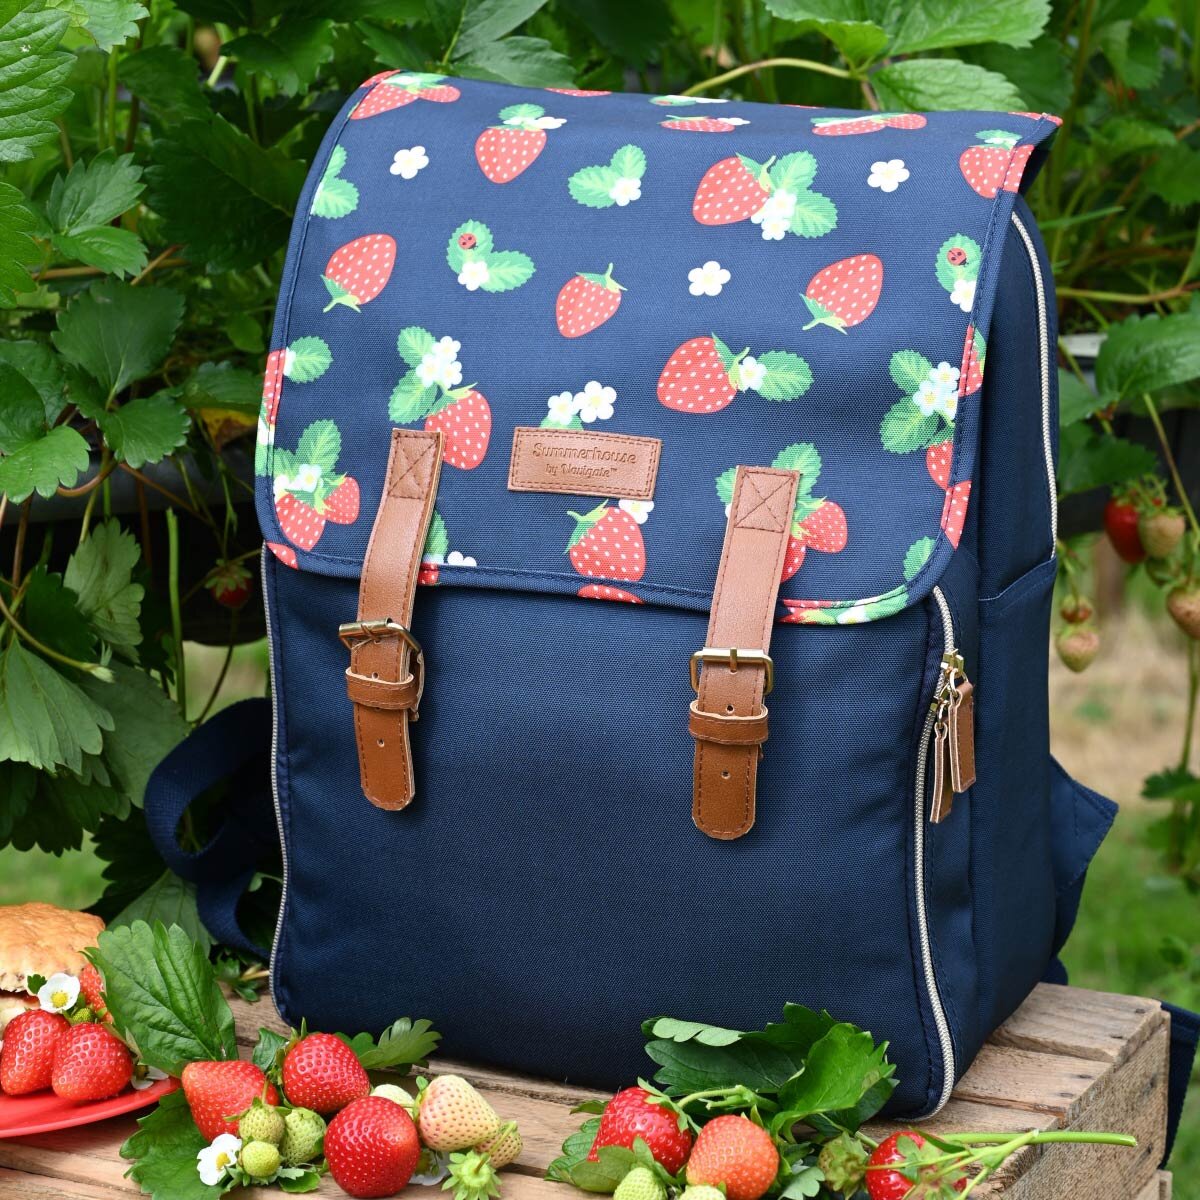 Navigate Strawberries & Cream 4 Person Picnic Backpack